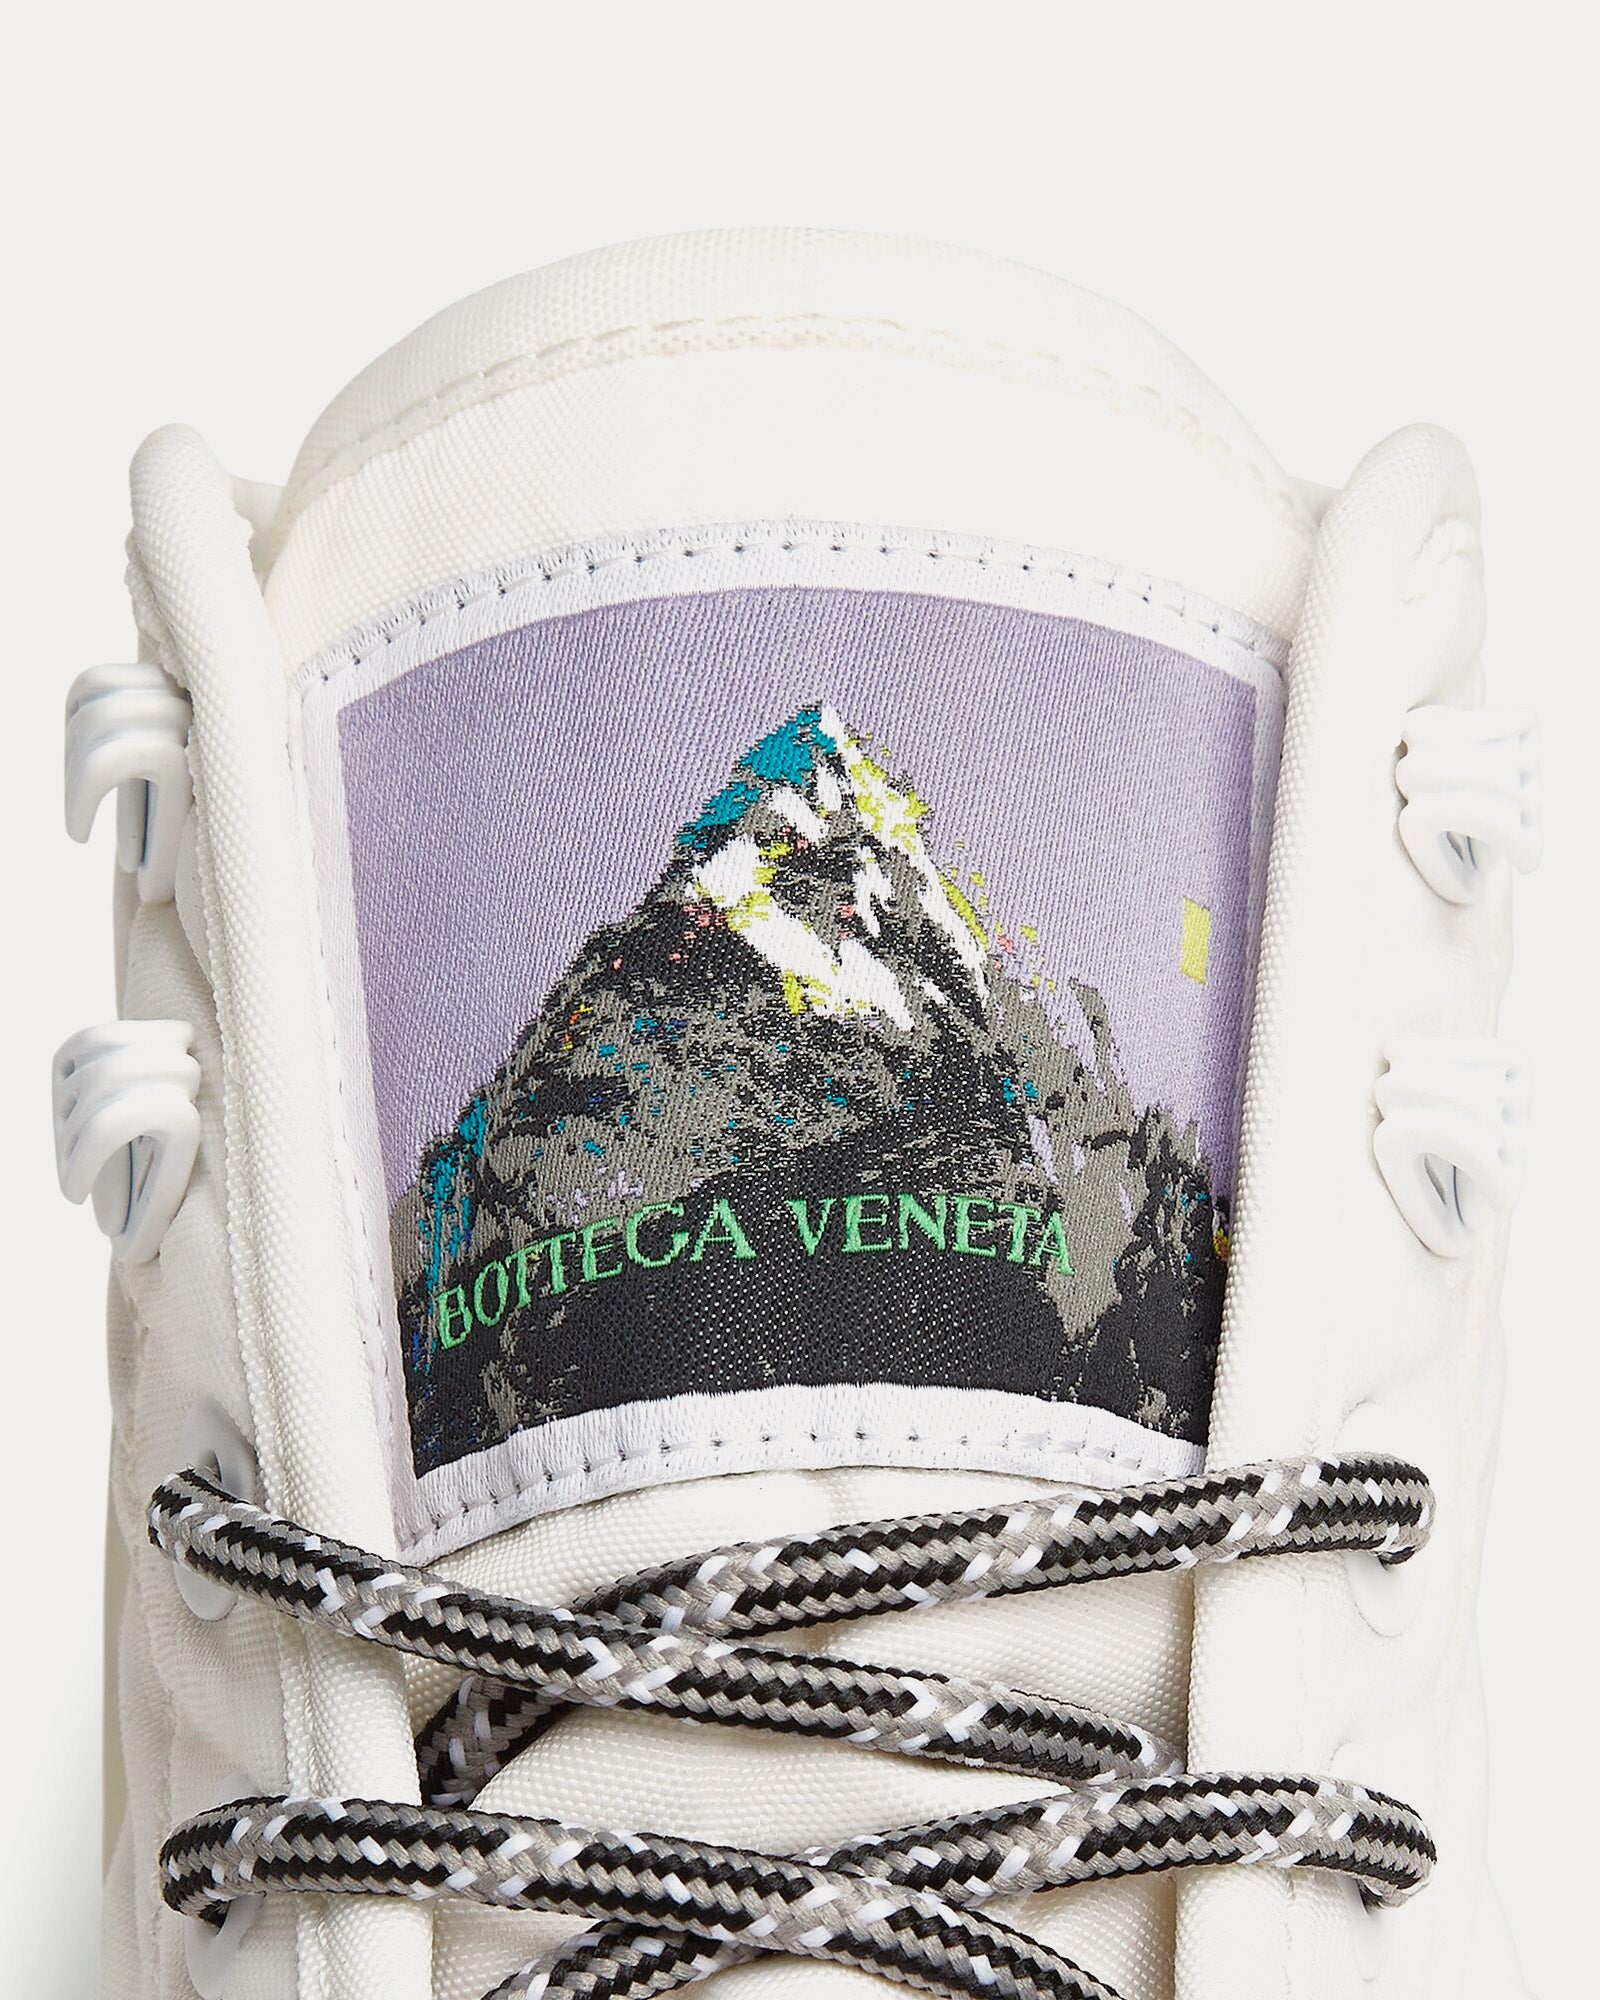 Bottega Veneta - Denver Optic White High Top Sneakers